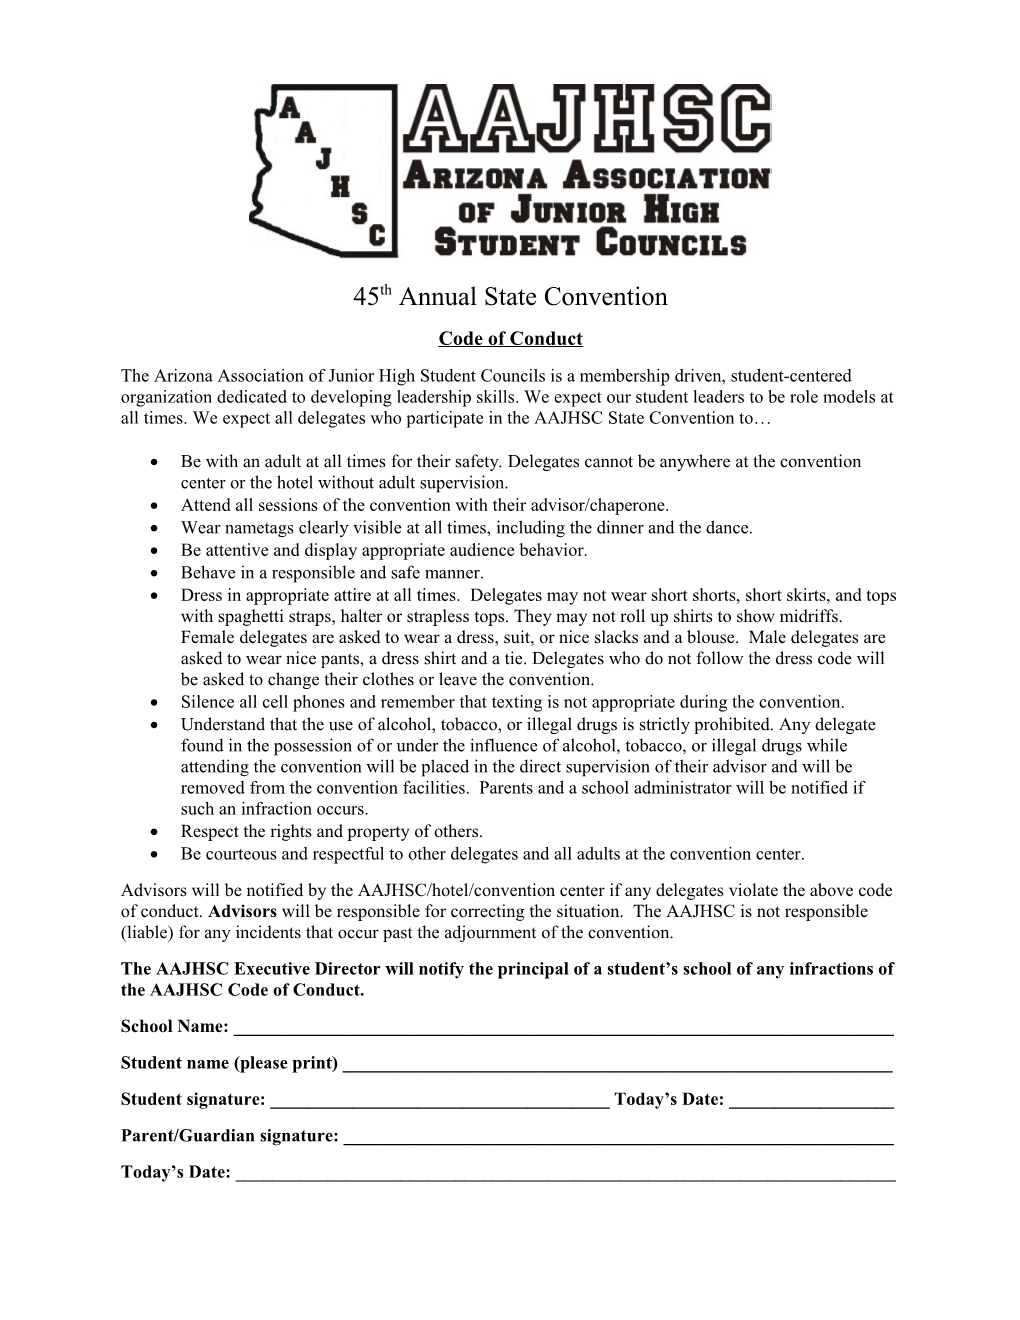 Arizona Association of Junior High Student Councils